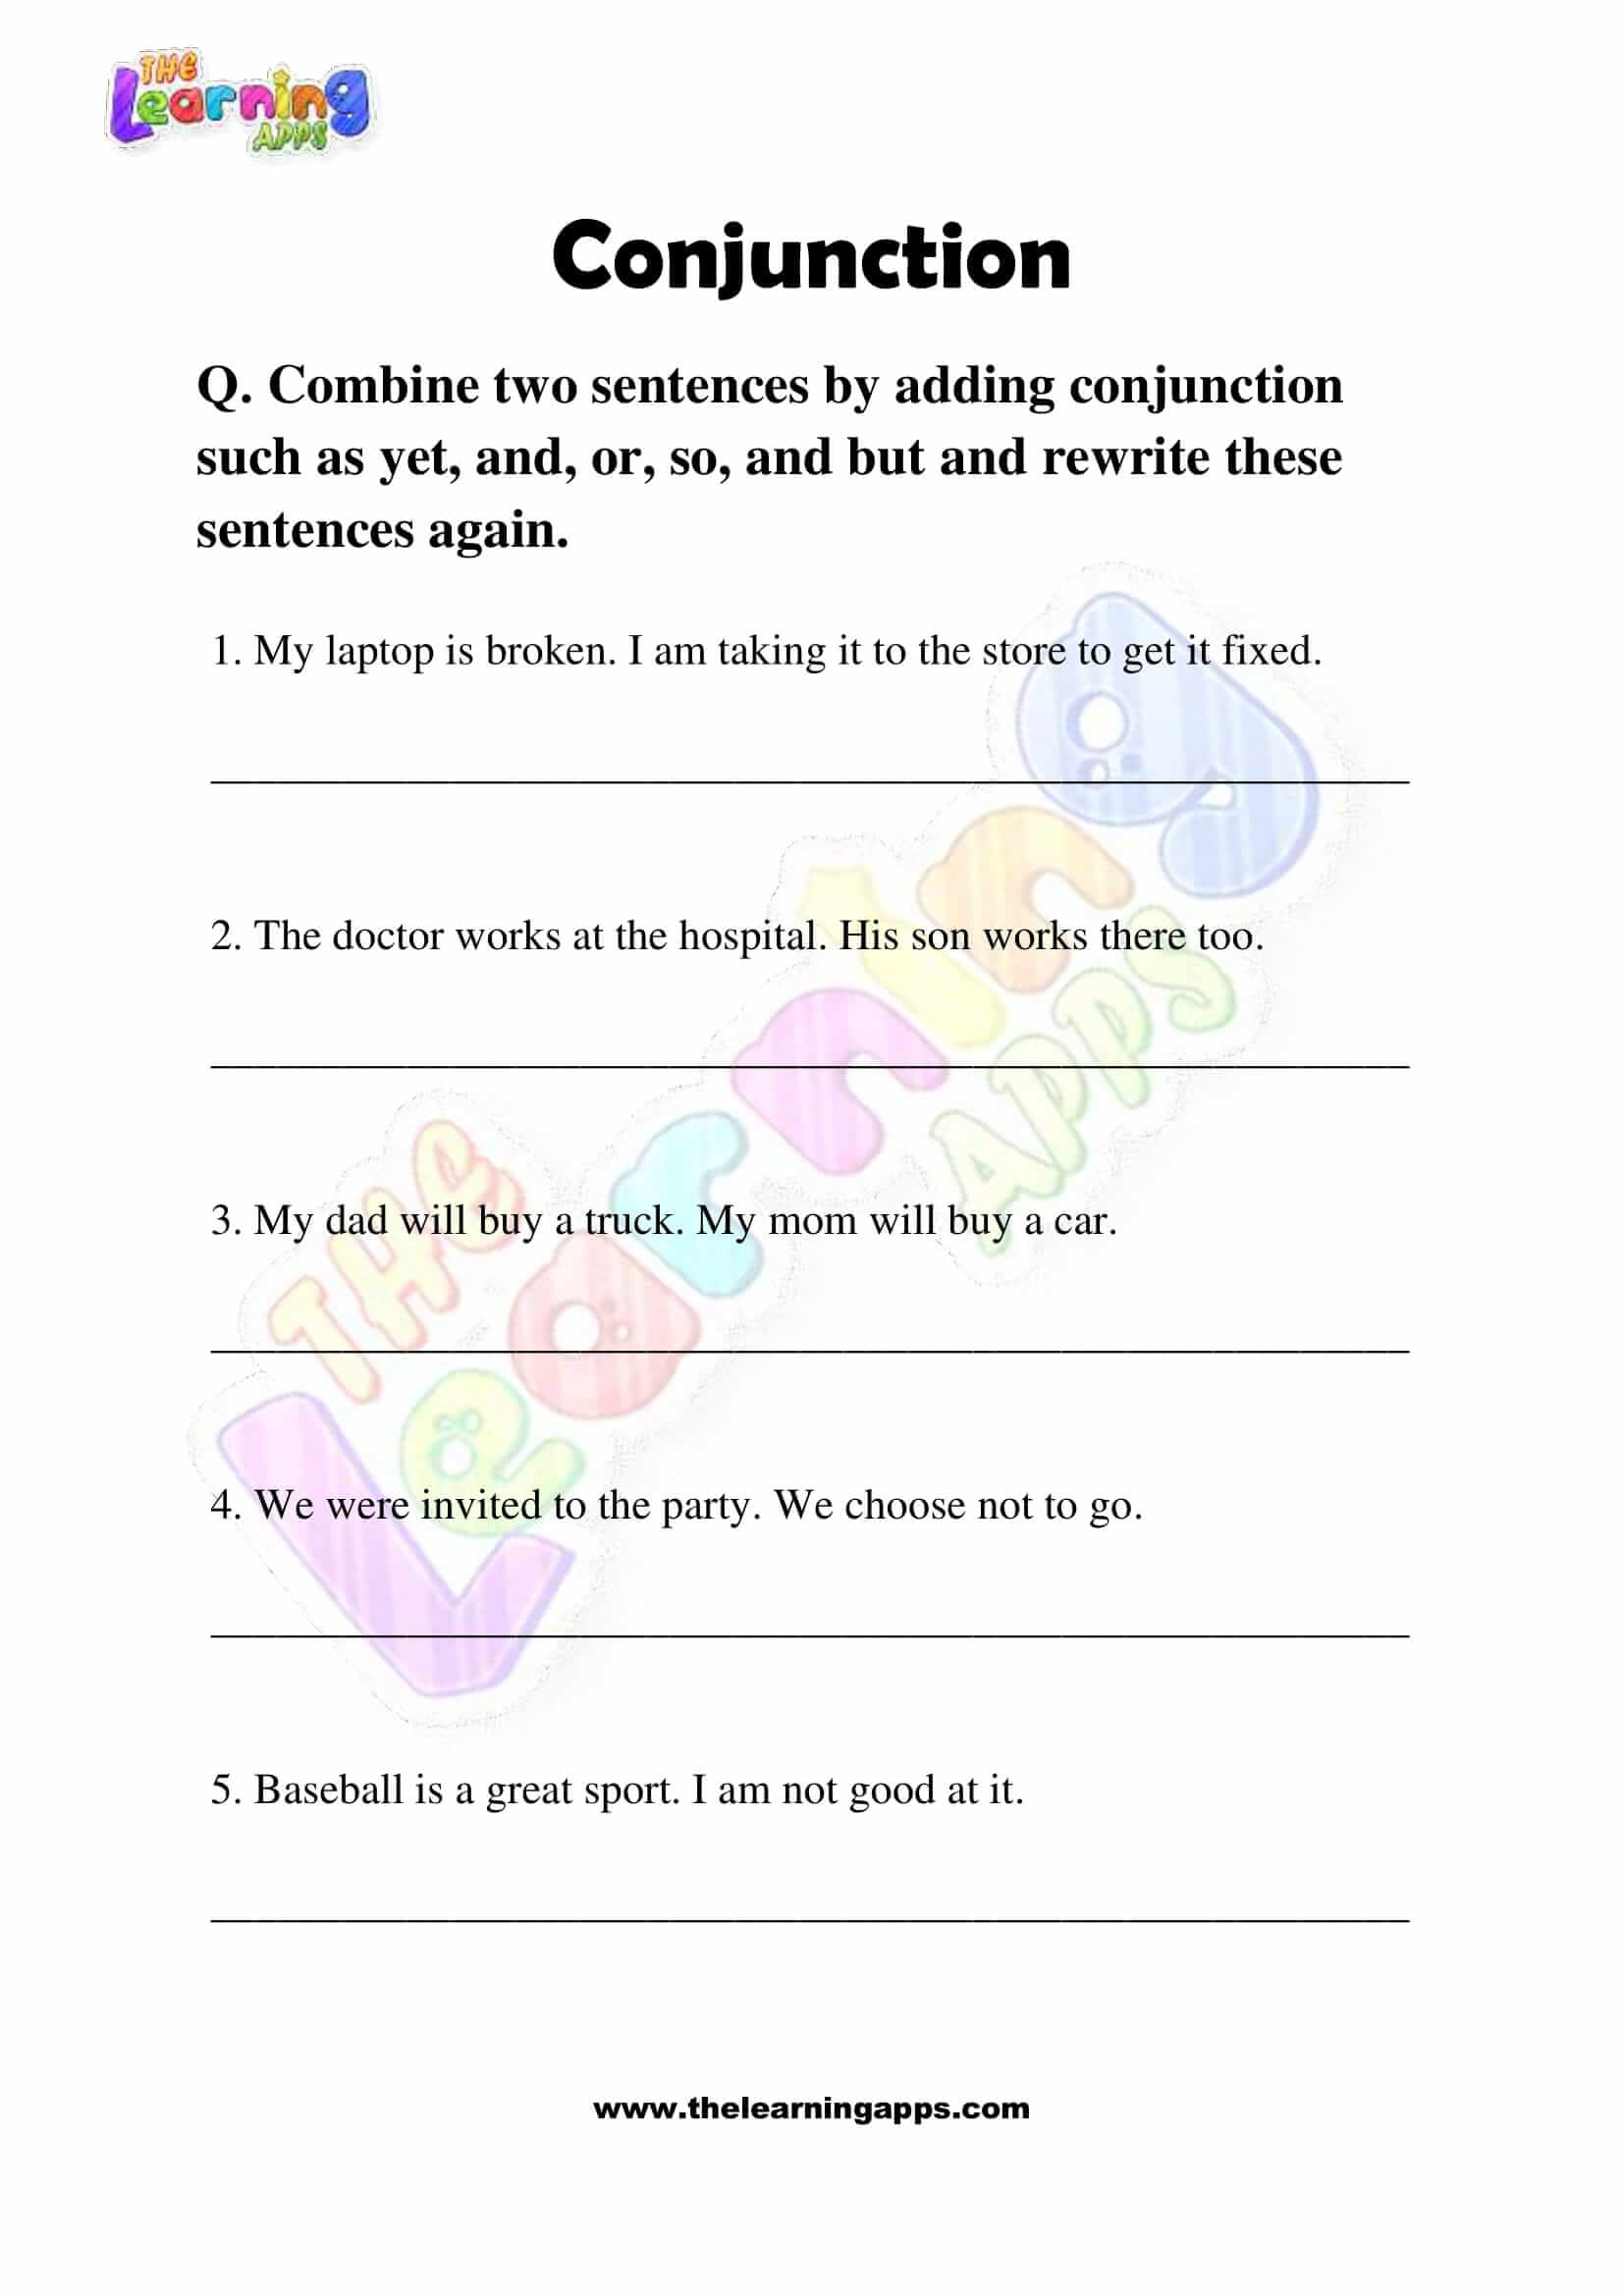 Conjunction Worksheets - Grade 3 - Activity 7